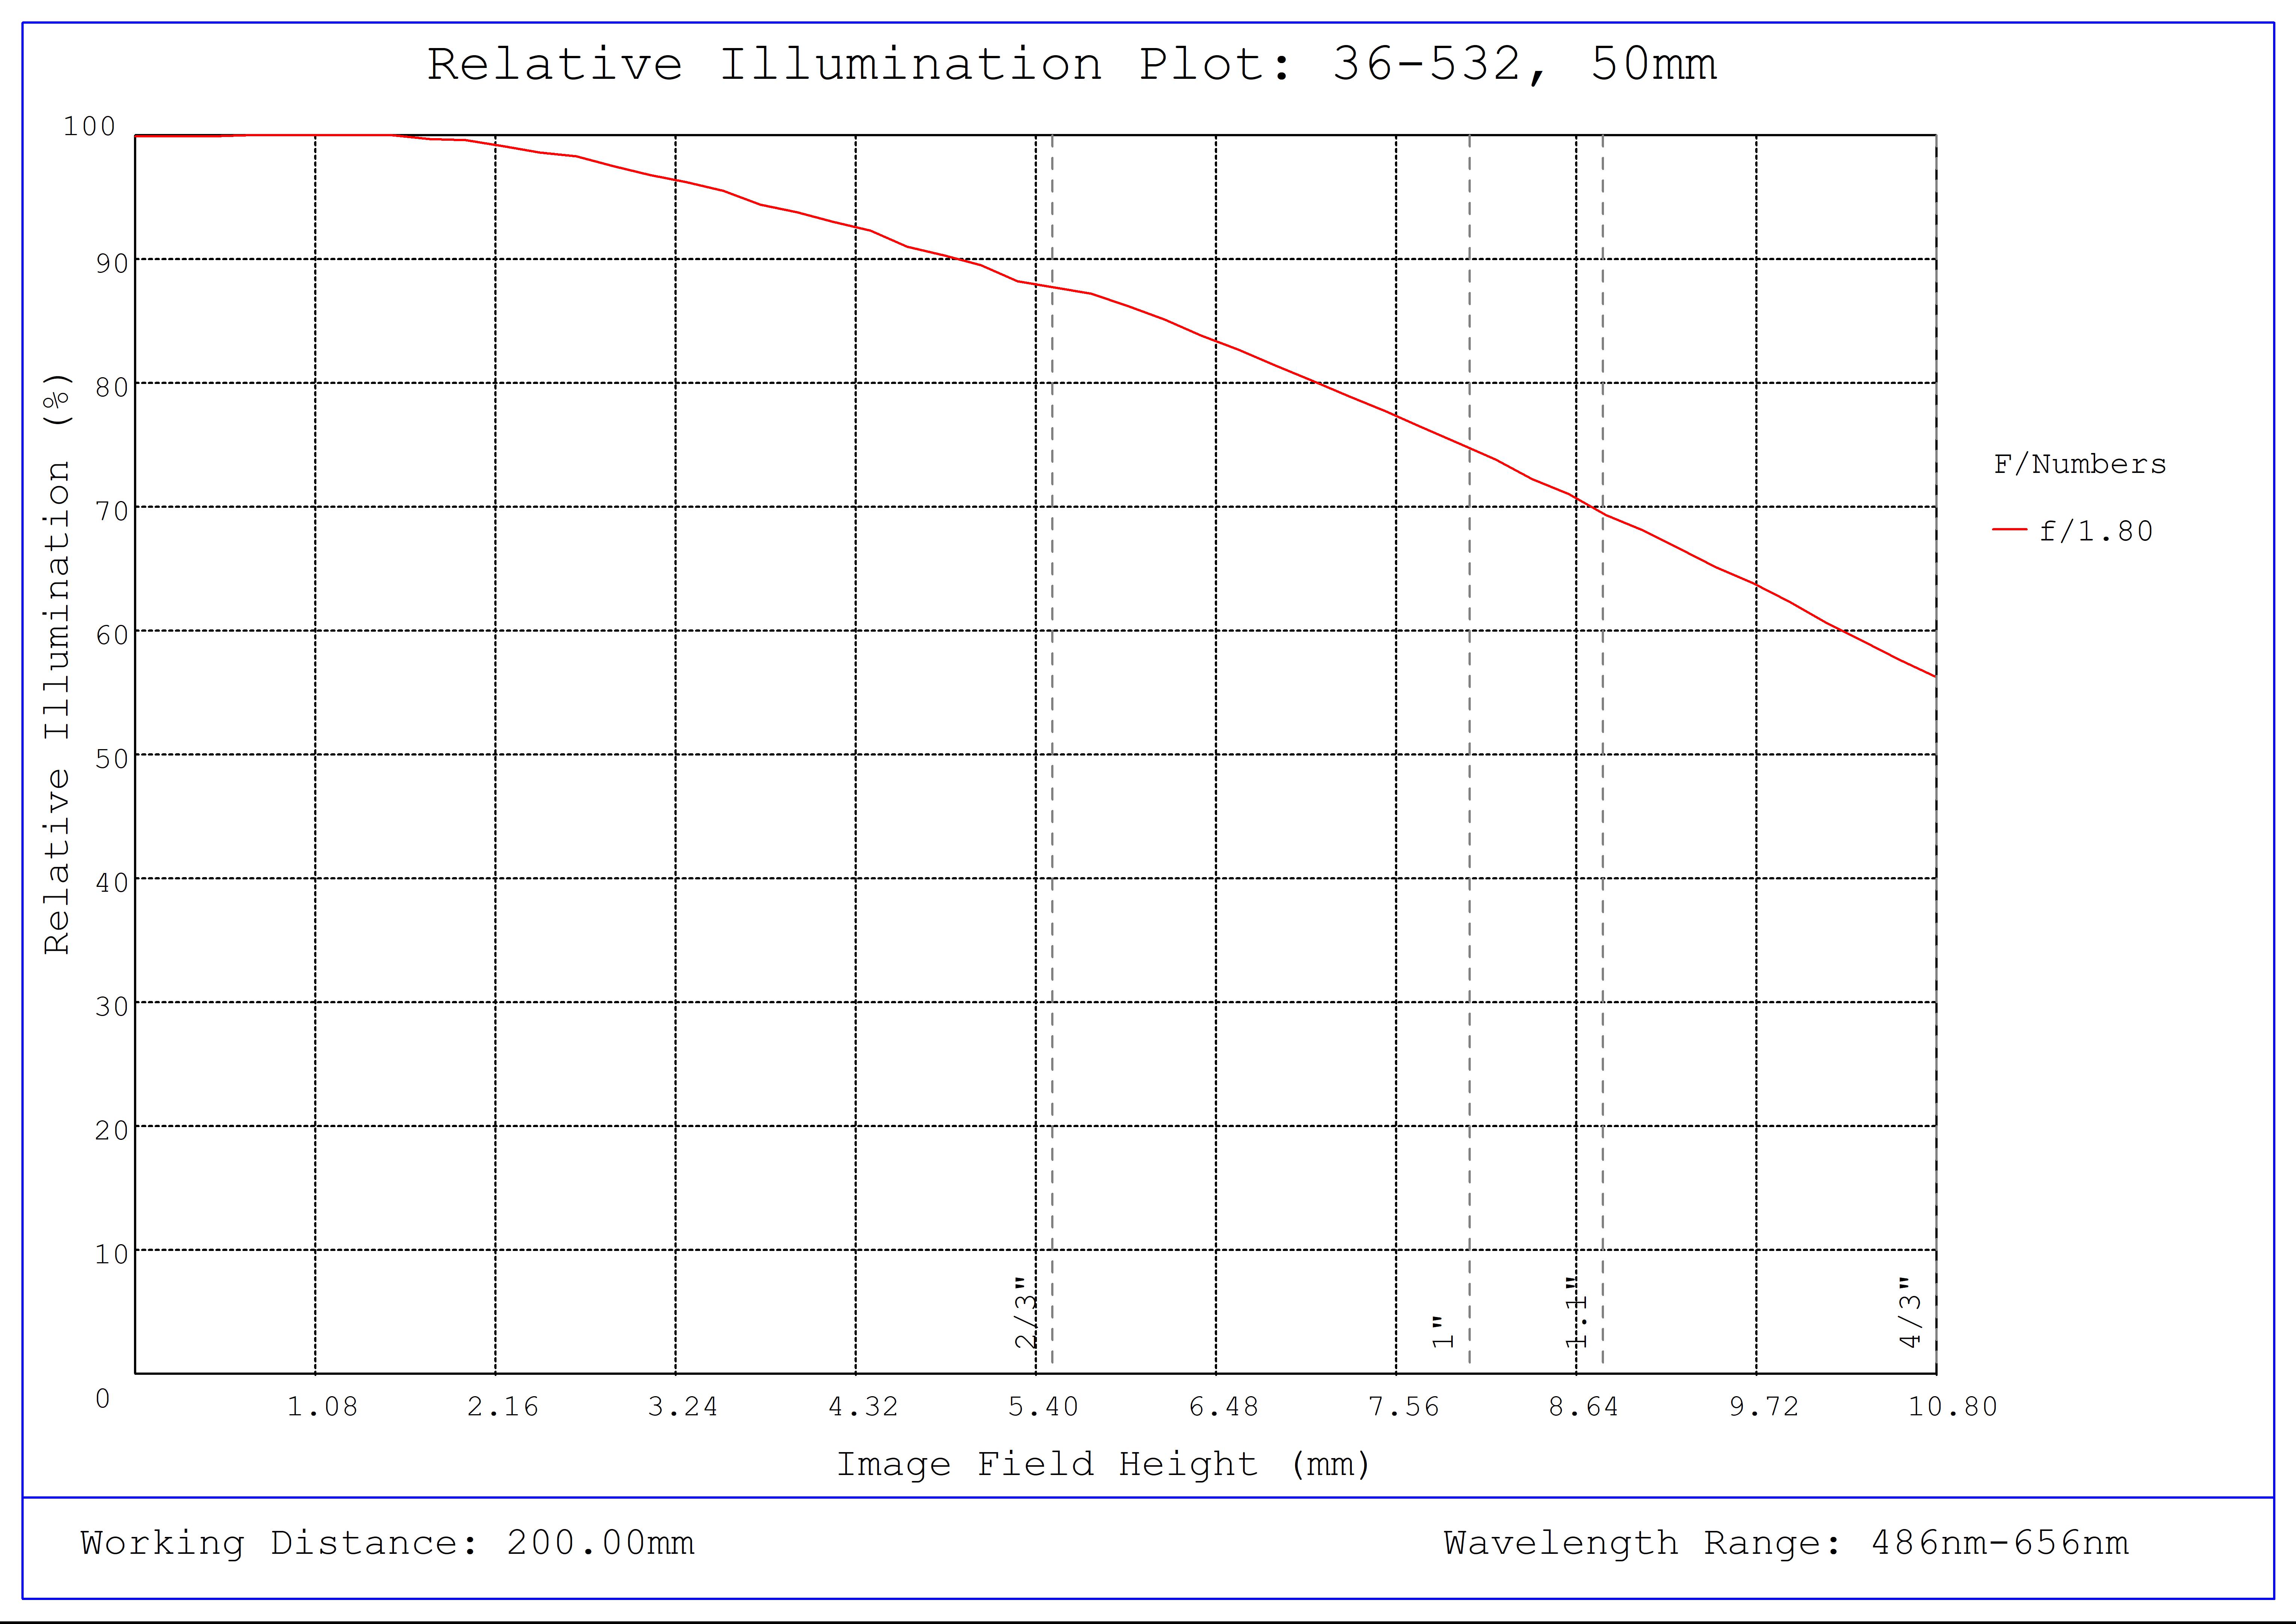 #36-532, 50mm f/1.8, HPr Series Fixed Focal Length Lens, Relative Illumination Plot